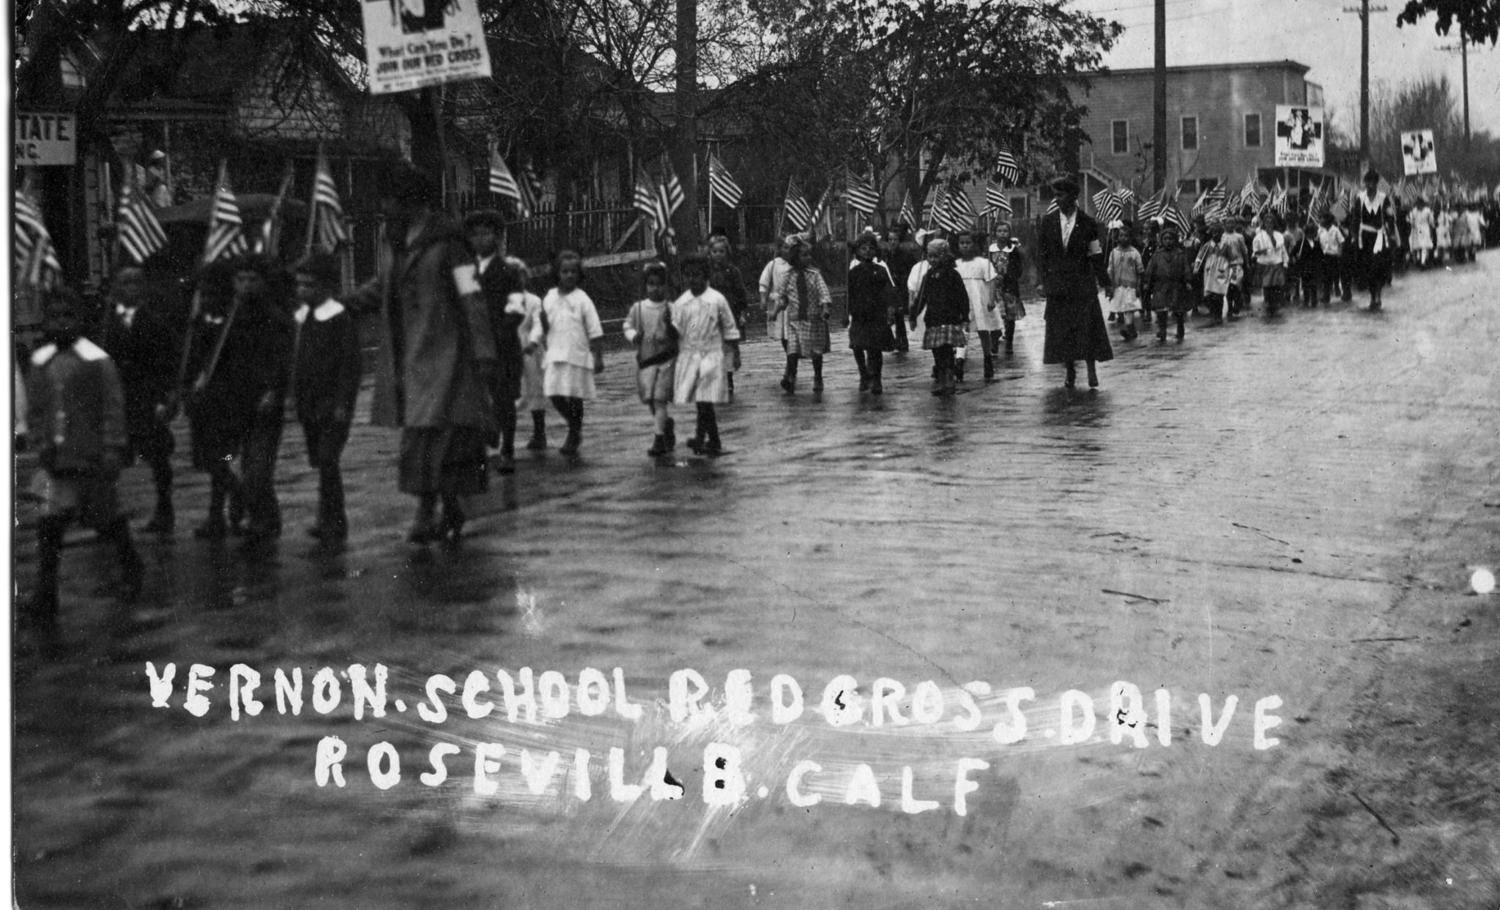 Carnegie Kids Club — Roseville Historical Society